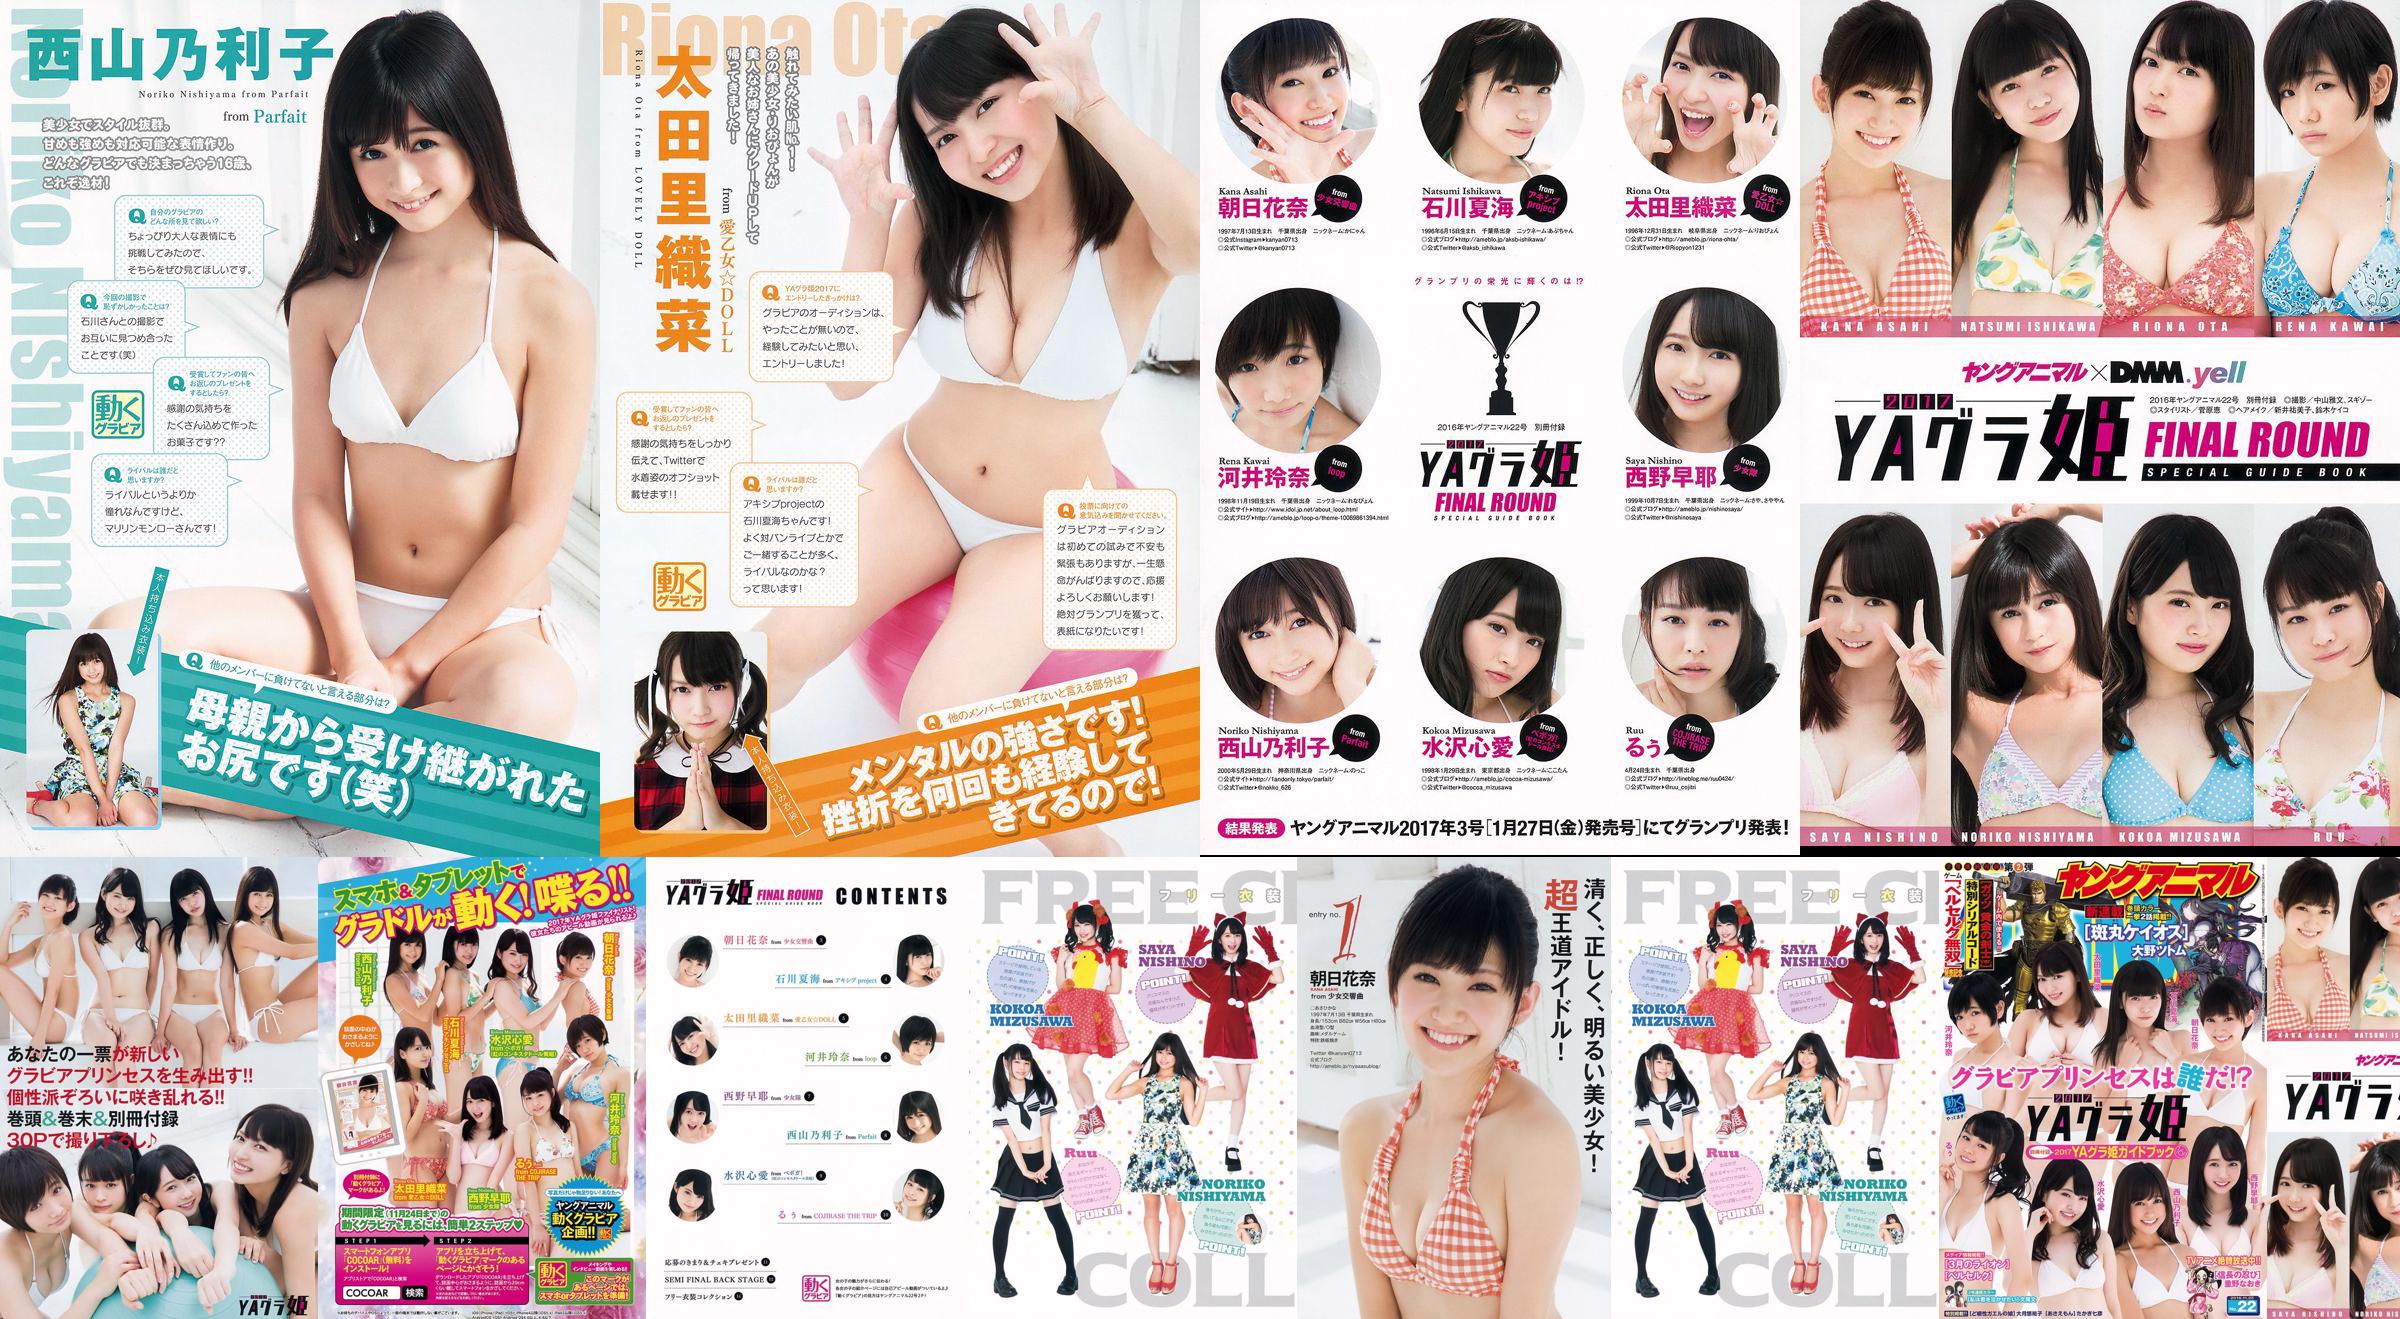 Mizusawa Beloved, Nishiyama Noriko, Nishino Haya, Kawai Reina, Ota Rina, Ishikawa Natsumi, Asahi Hana [น้องสัตว์] นิตยสารภาพถ่ายฉบับที่ 22 ประจำปี 2559 No.f056f2 หน้า 15